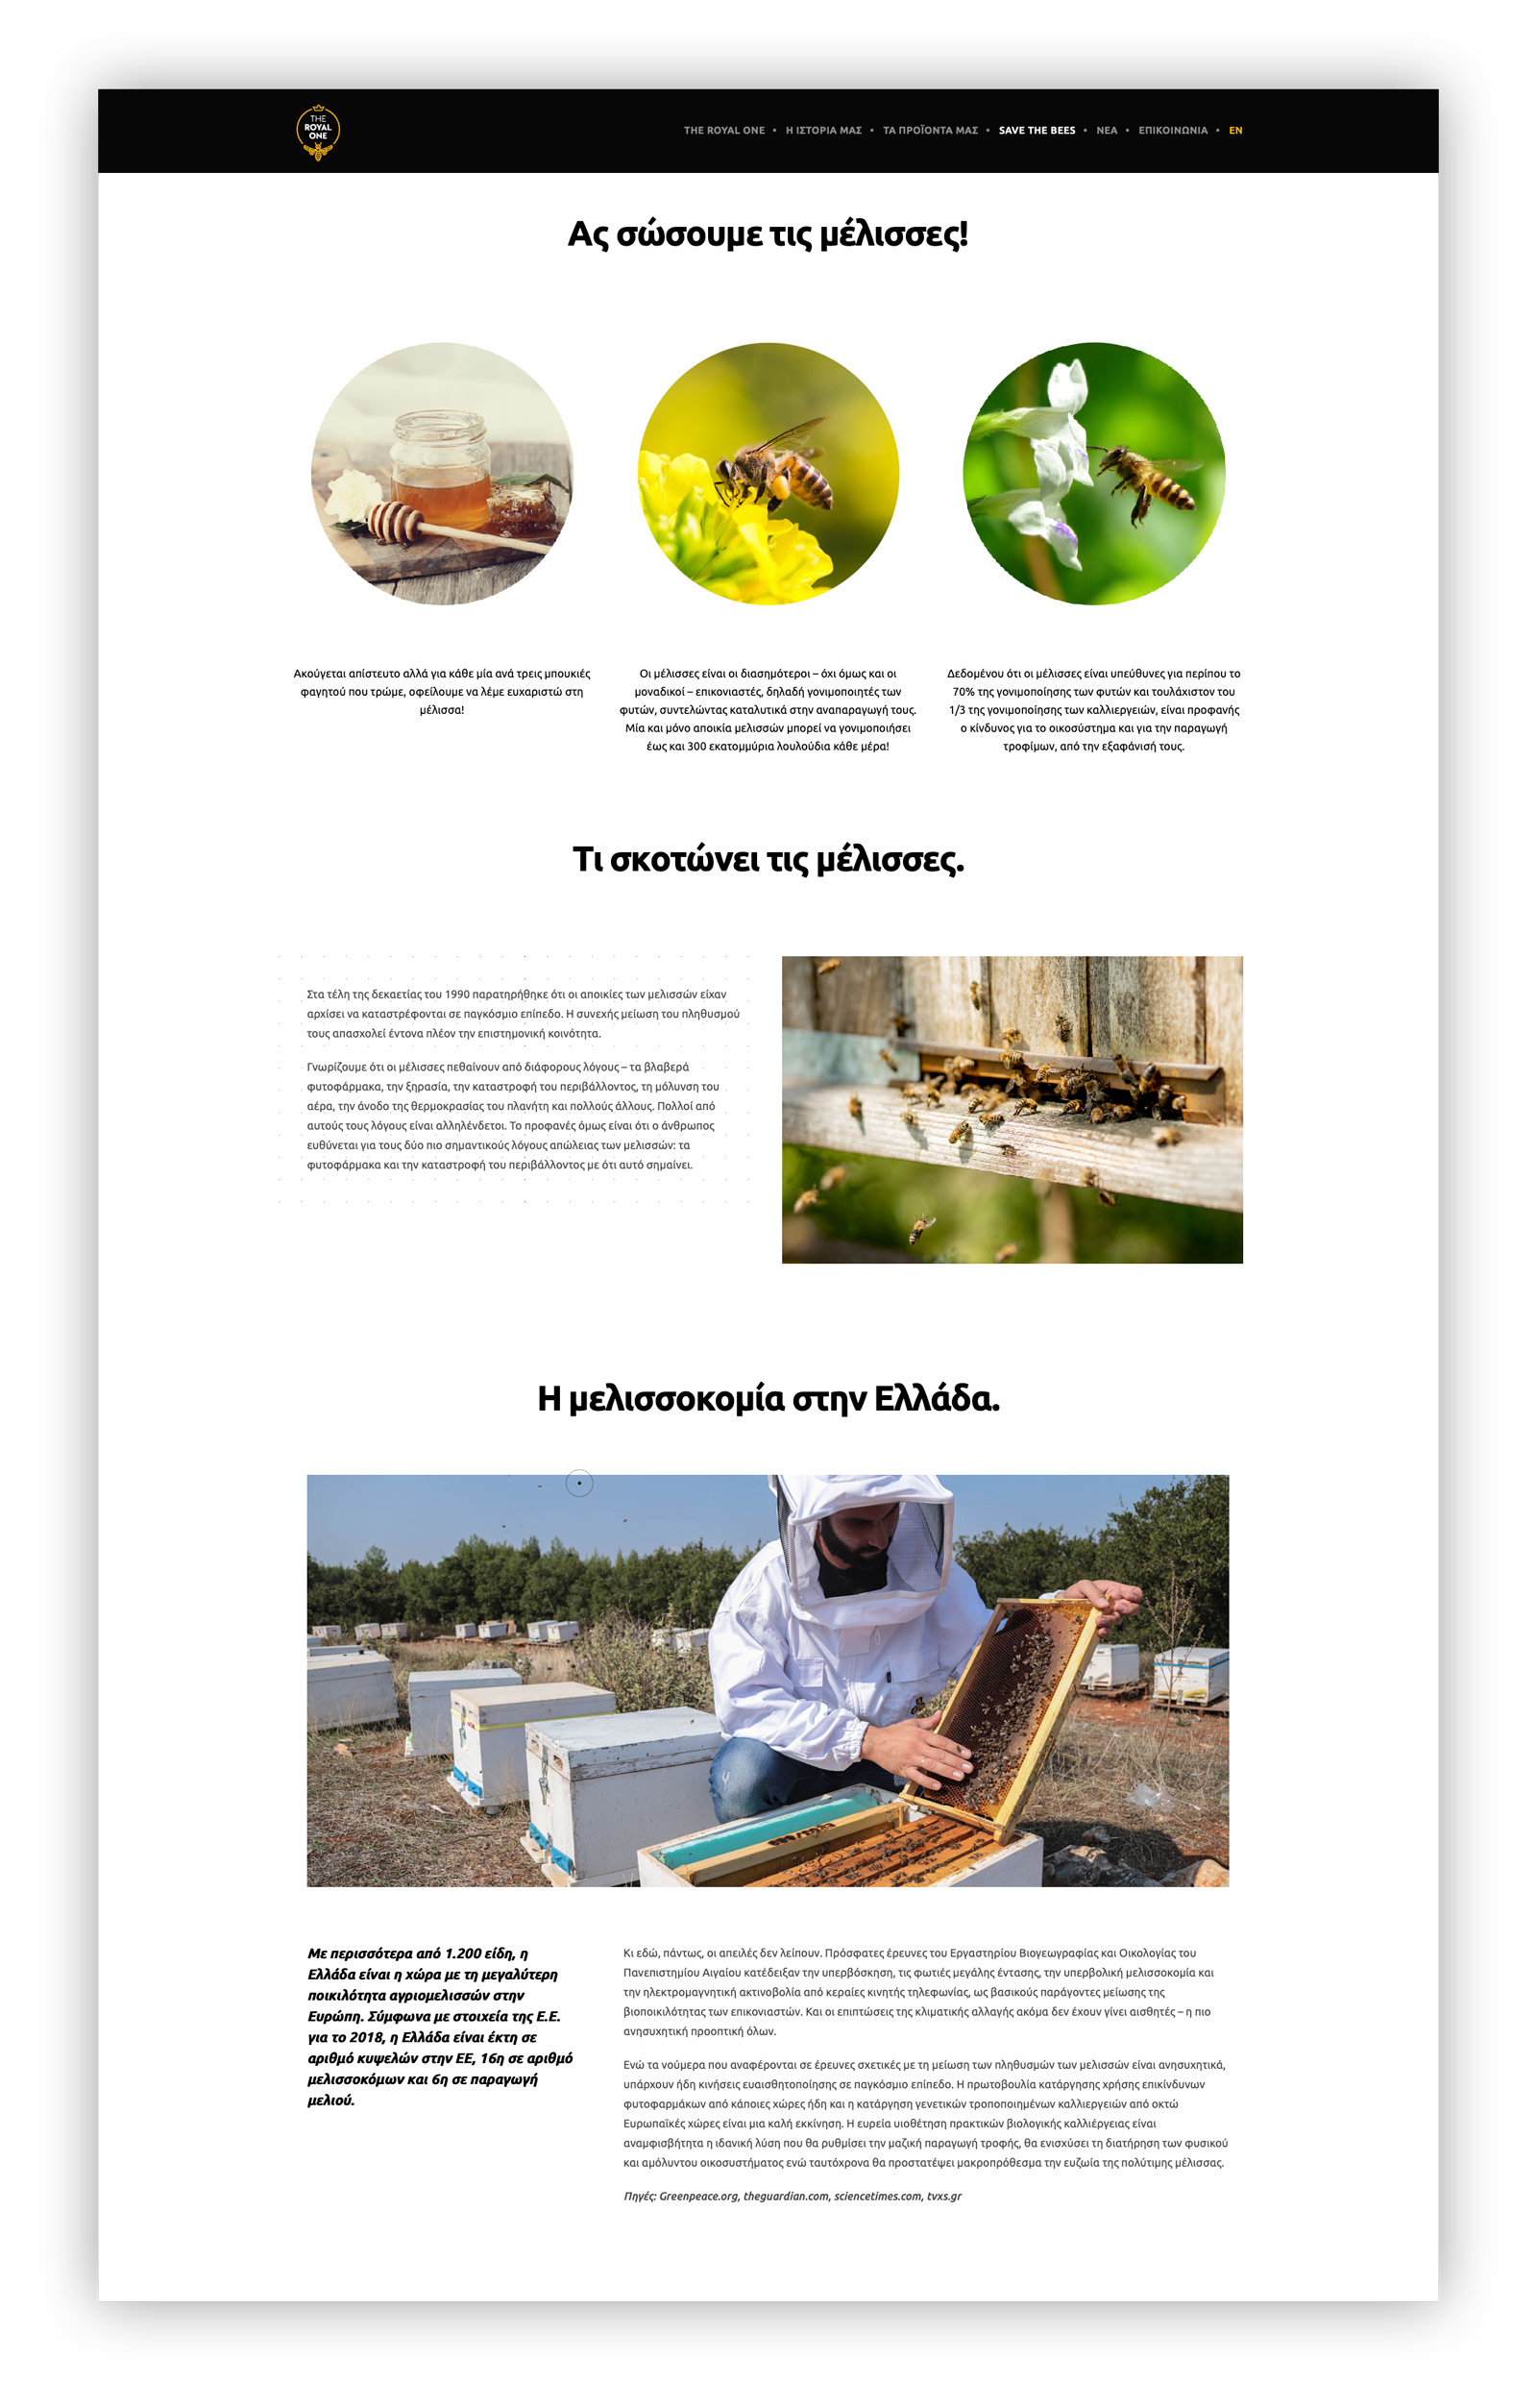 Website design and development for the royal one greek honey.